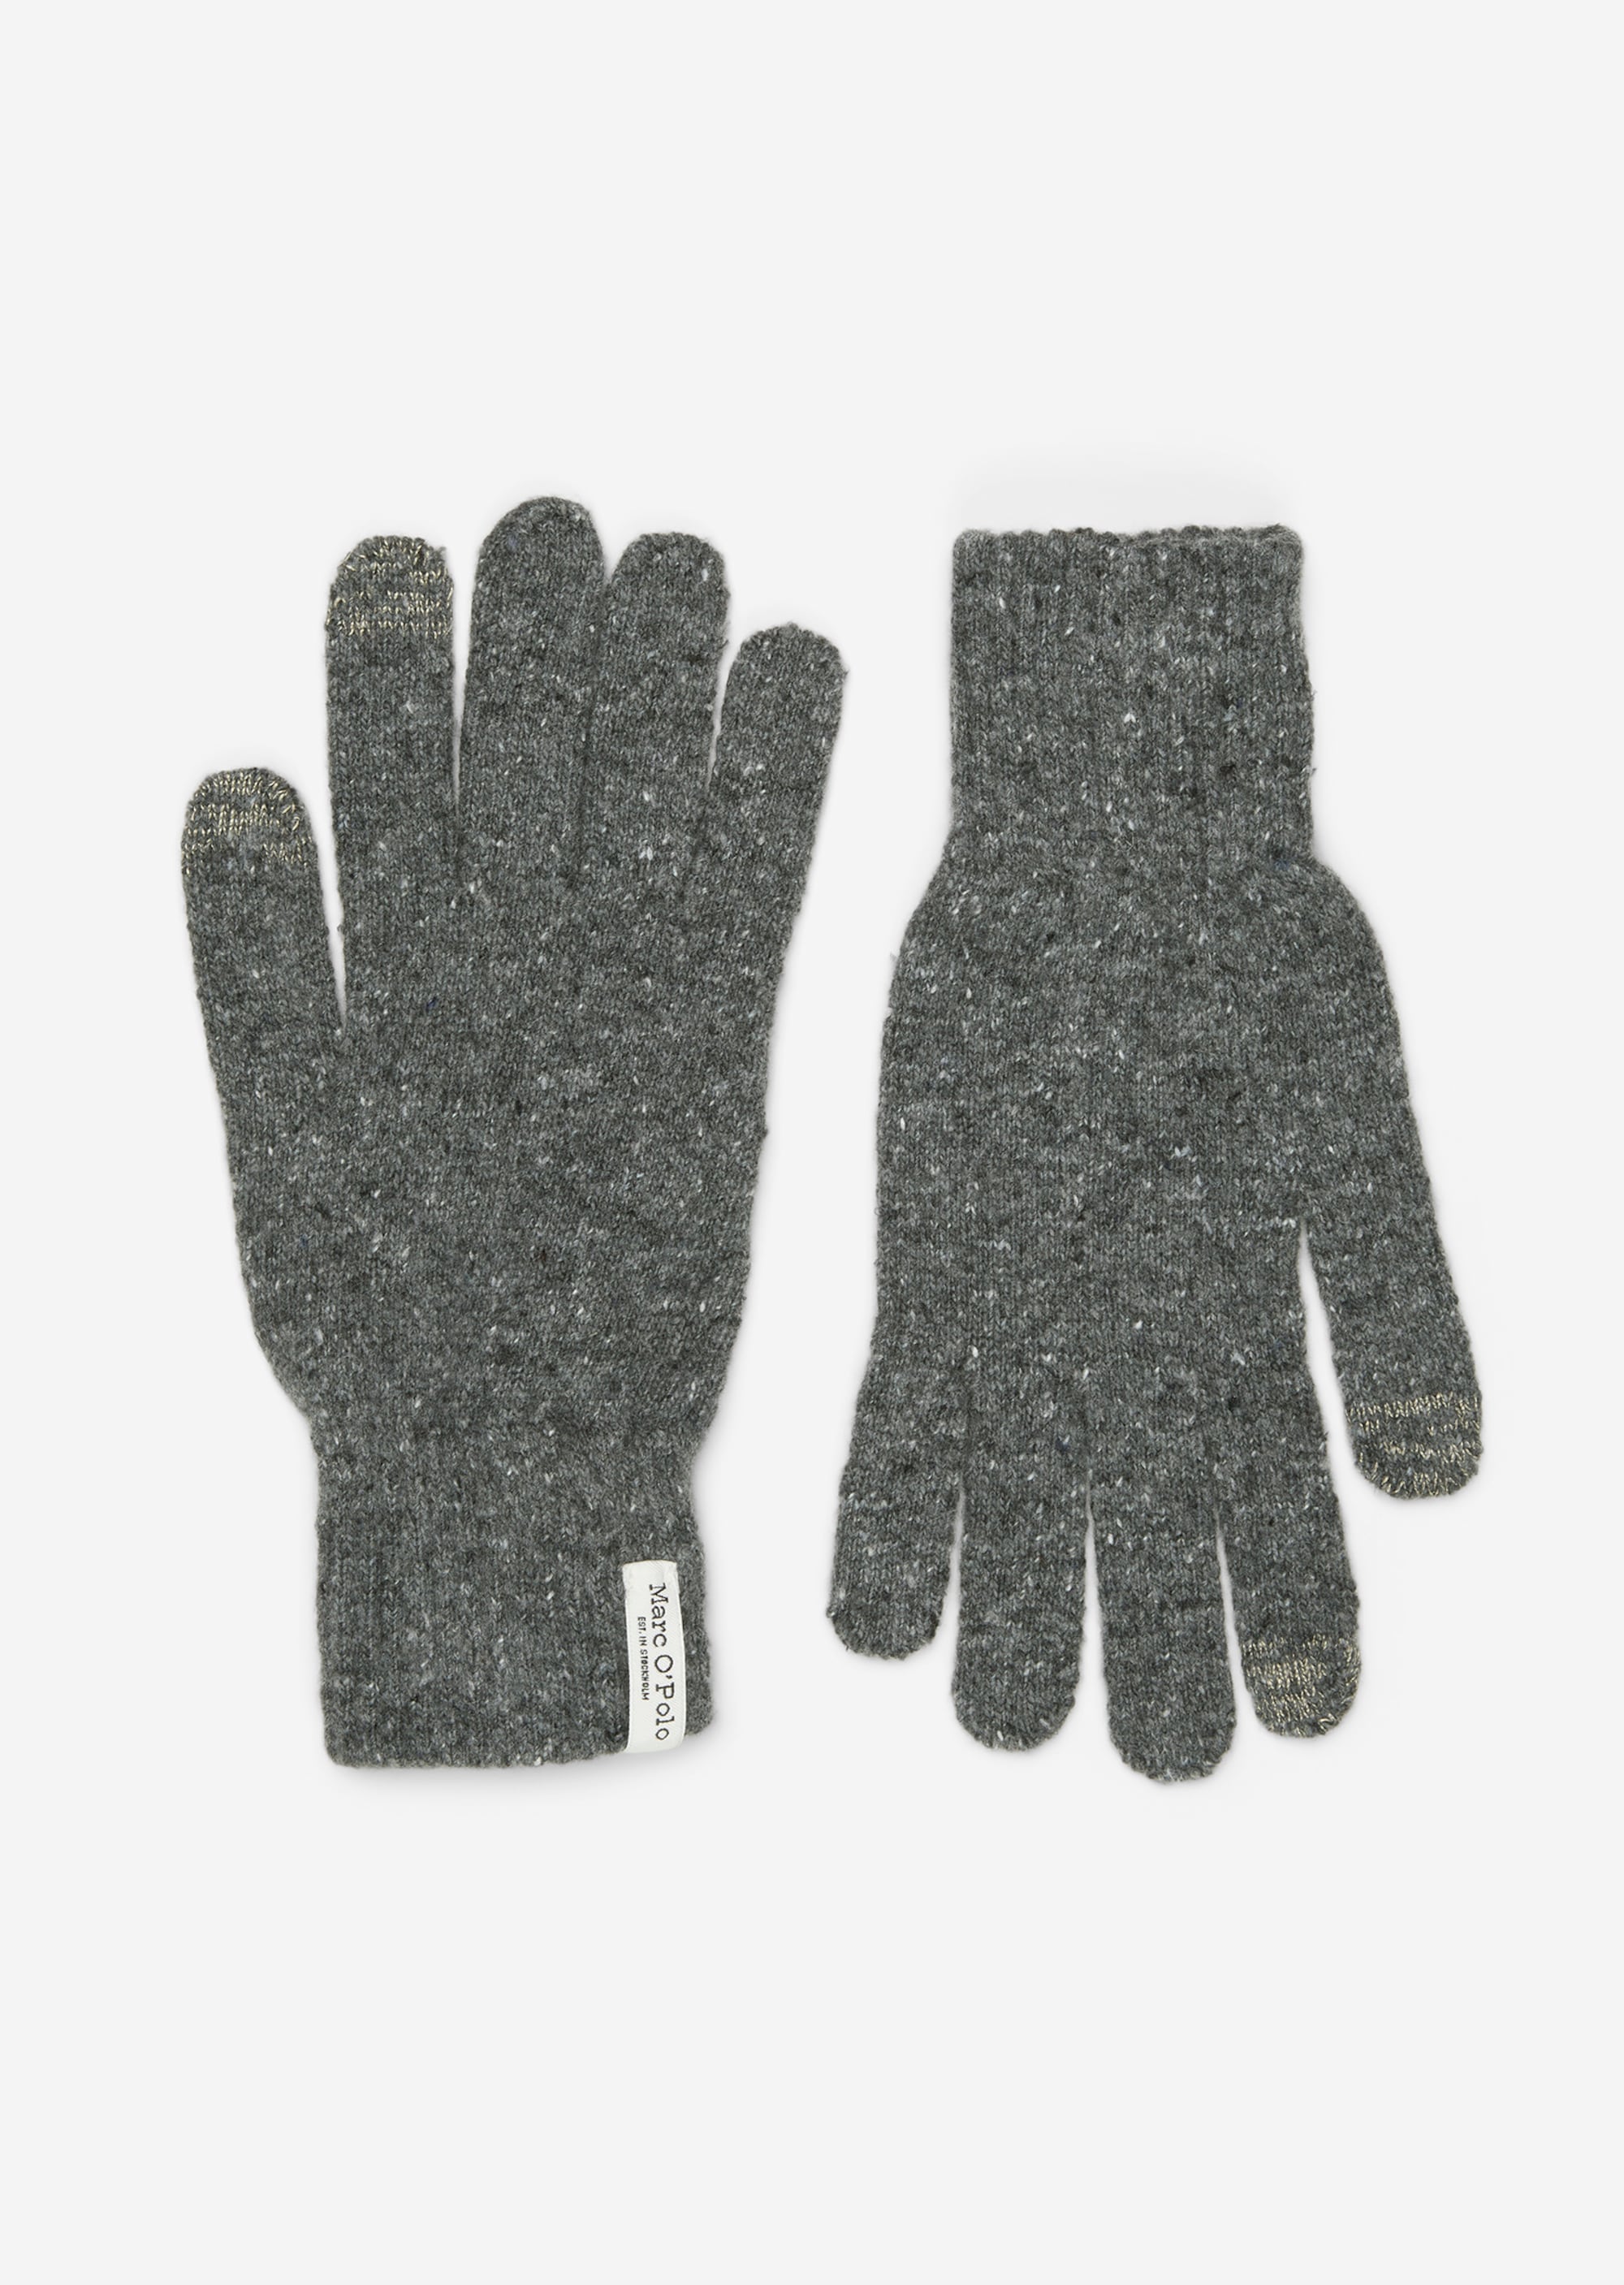 Strickhandschuhe aus softem Schurwolle-Mix - grau | Handschuhe | MARC O\'POLO | Strickhandschuhe